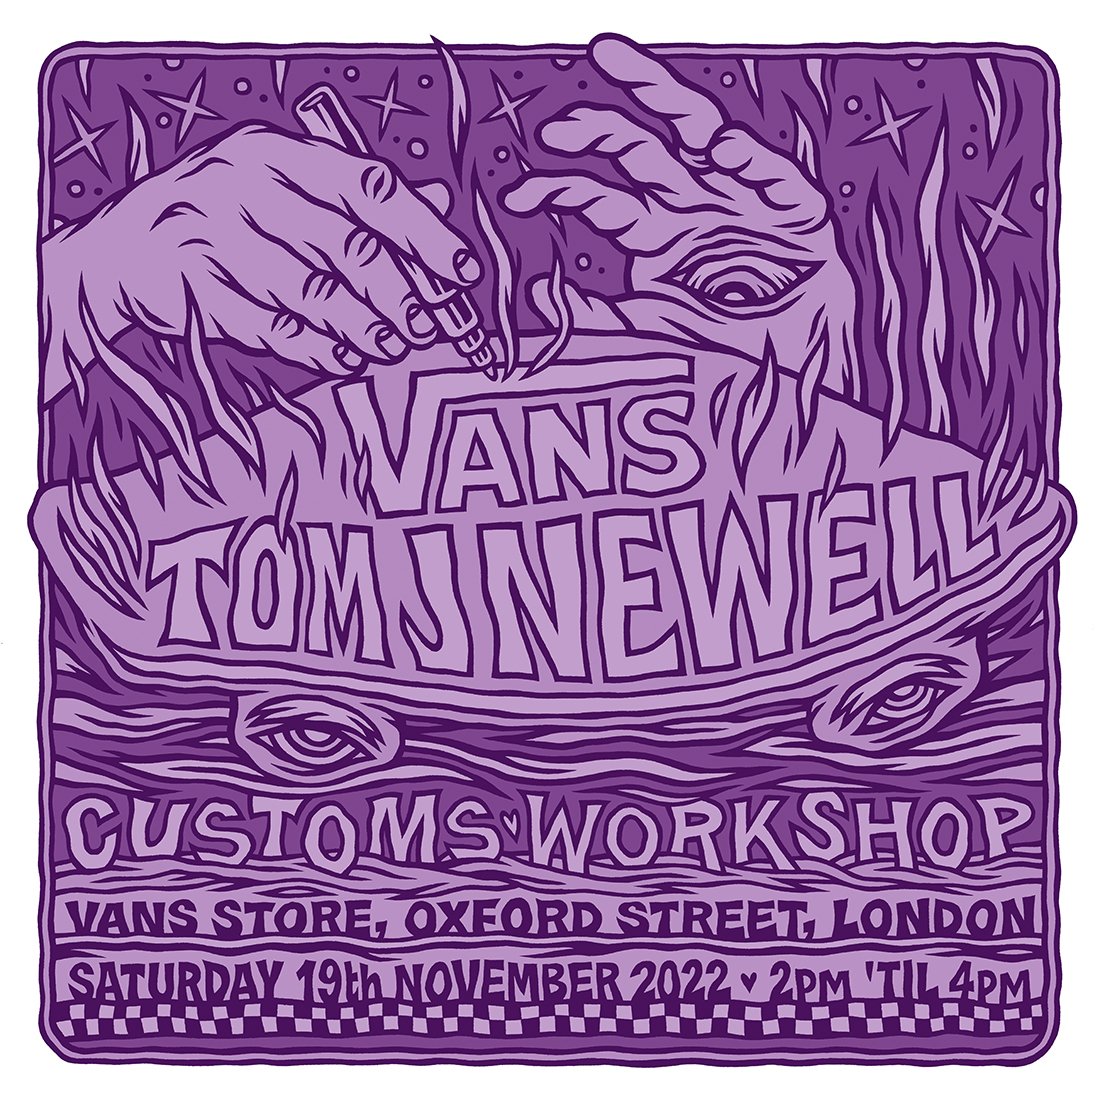 Vans Custom Workshop with Tom J Newell